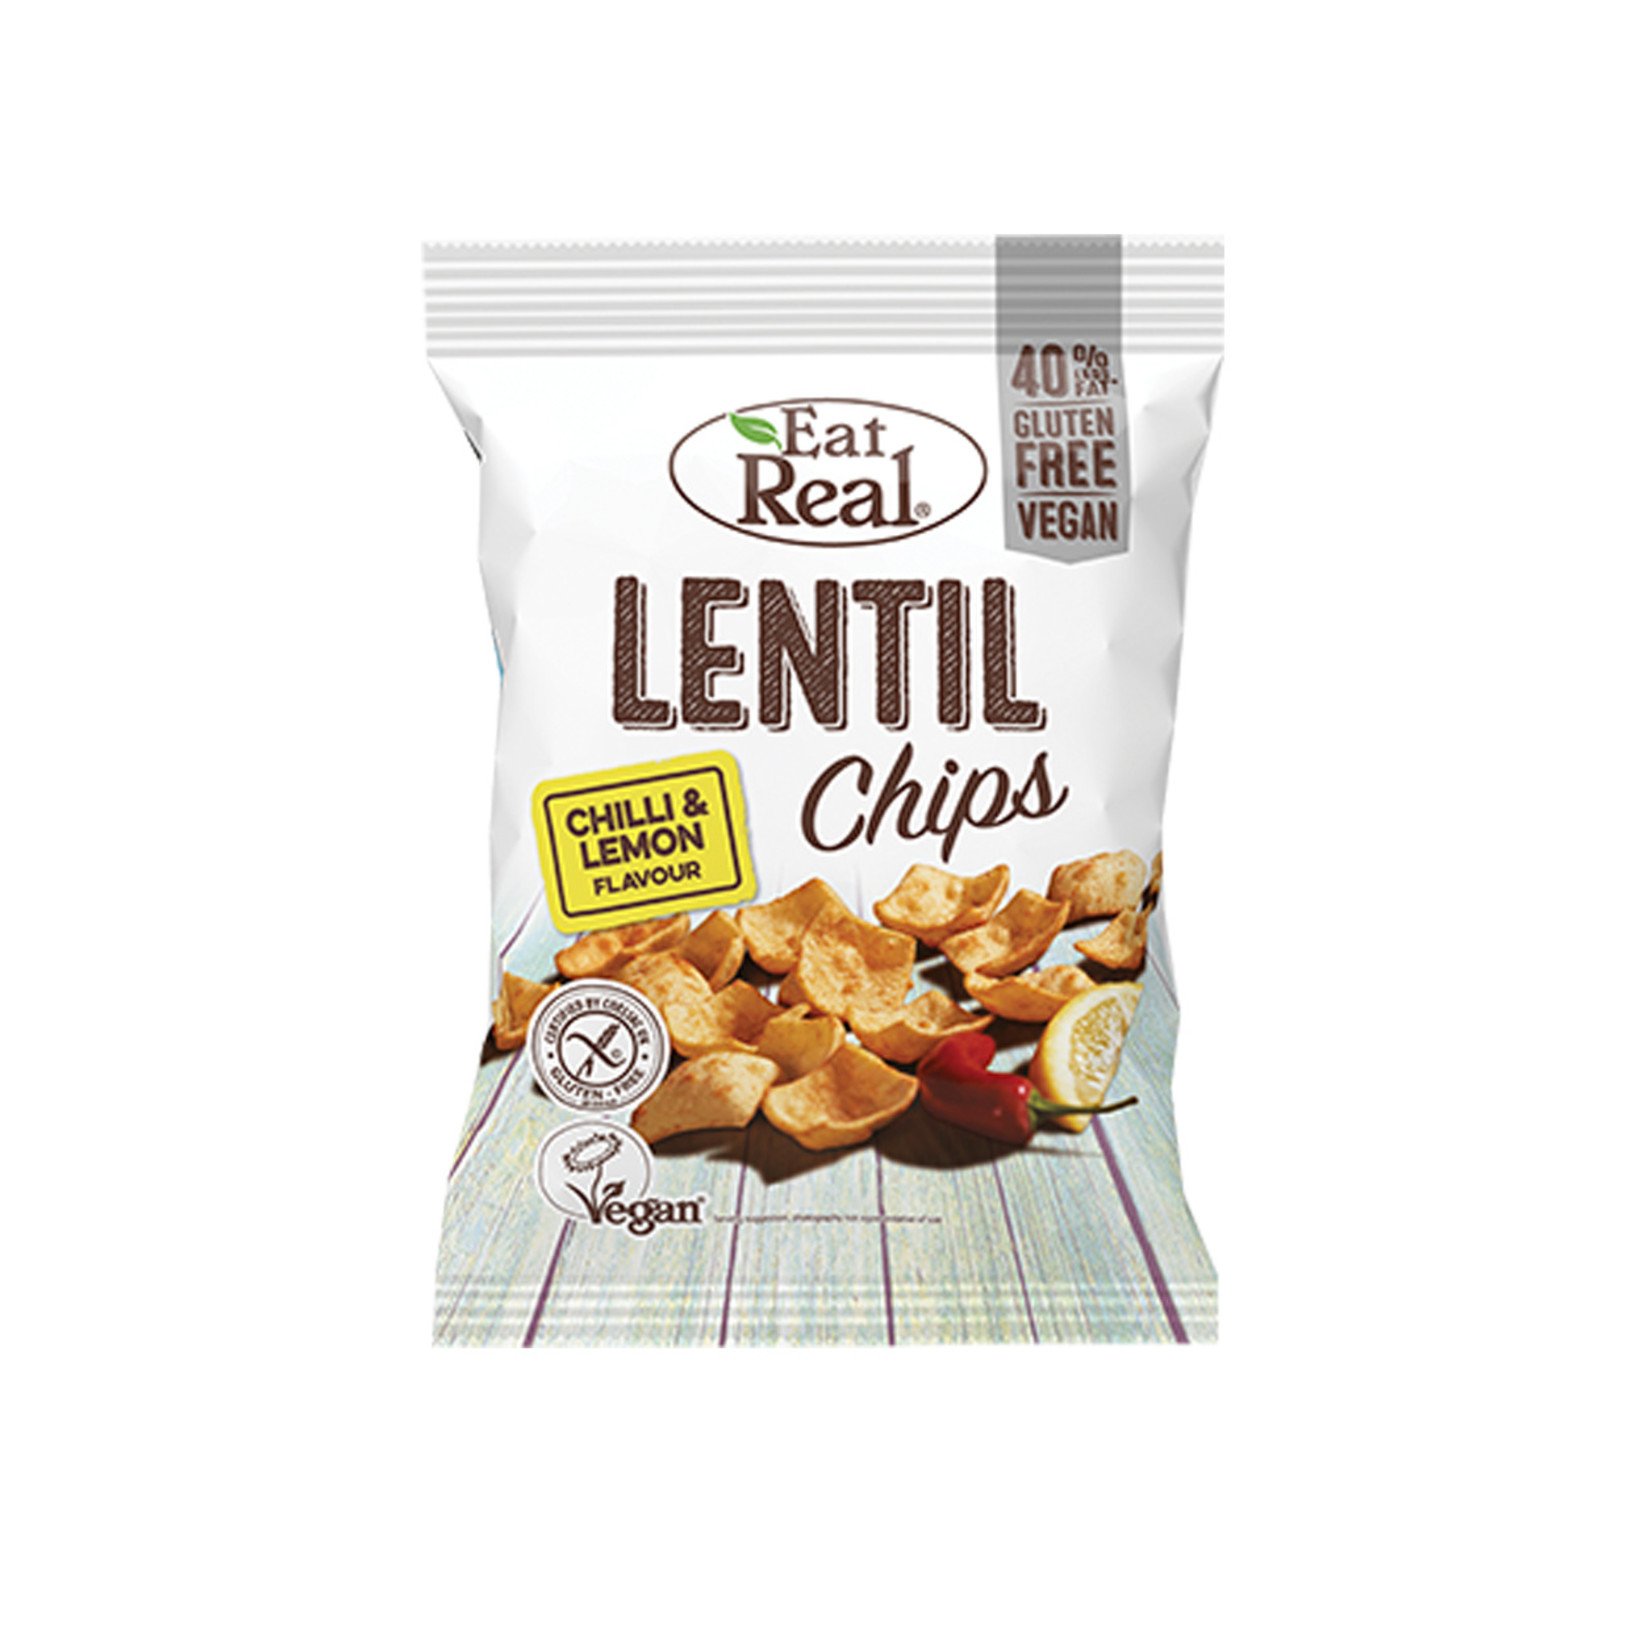 Eat Real Eat real lentil chilli & lemon113gr